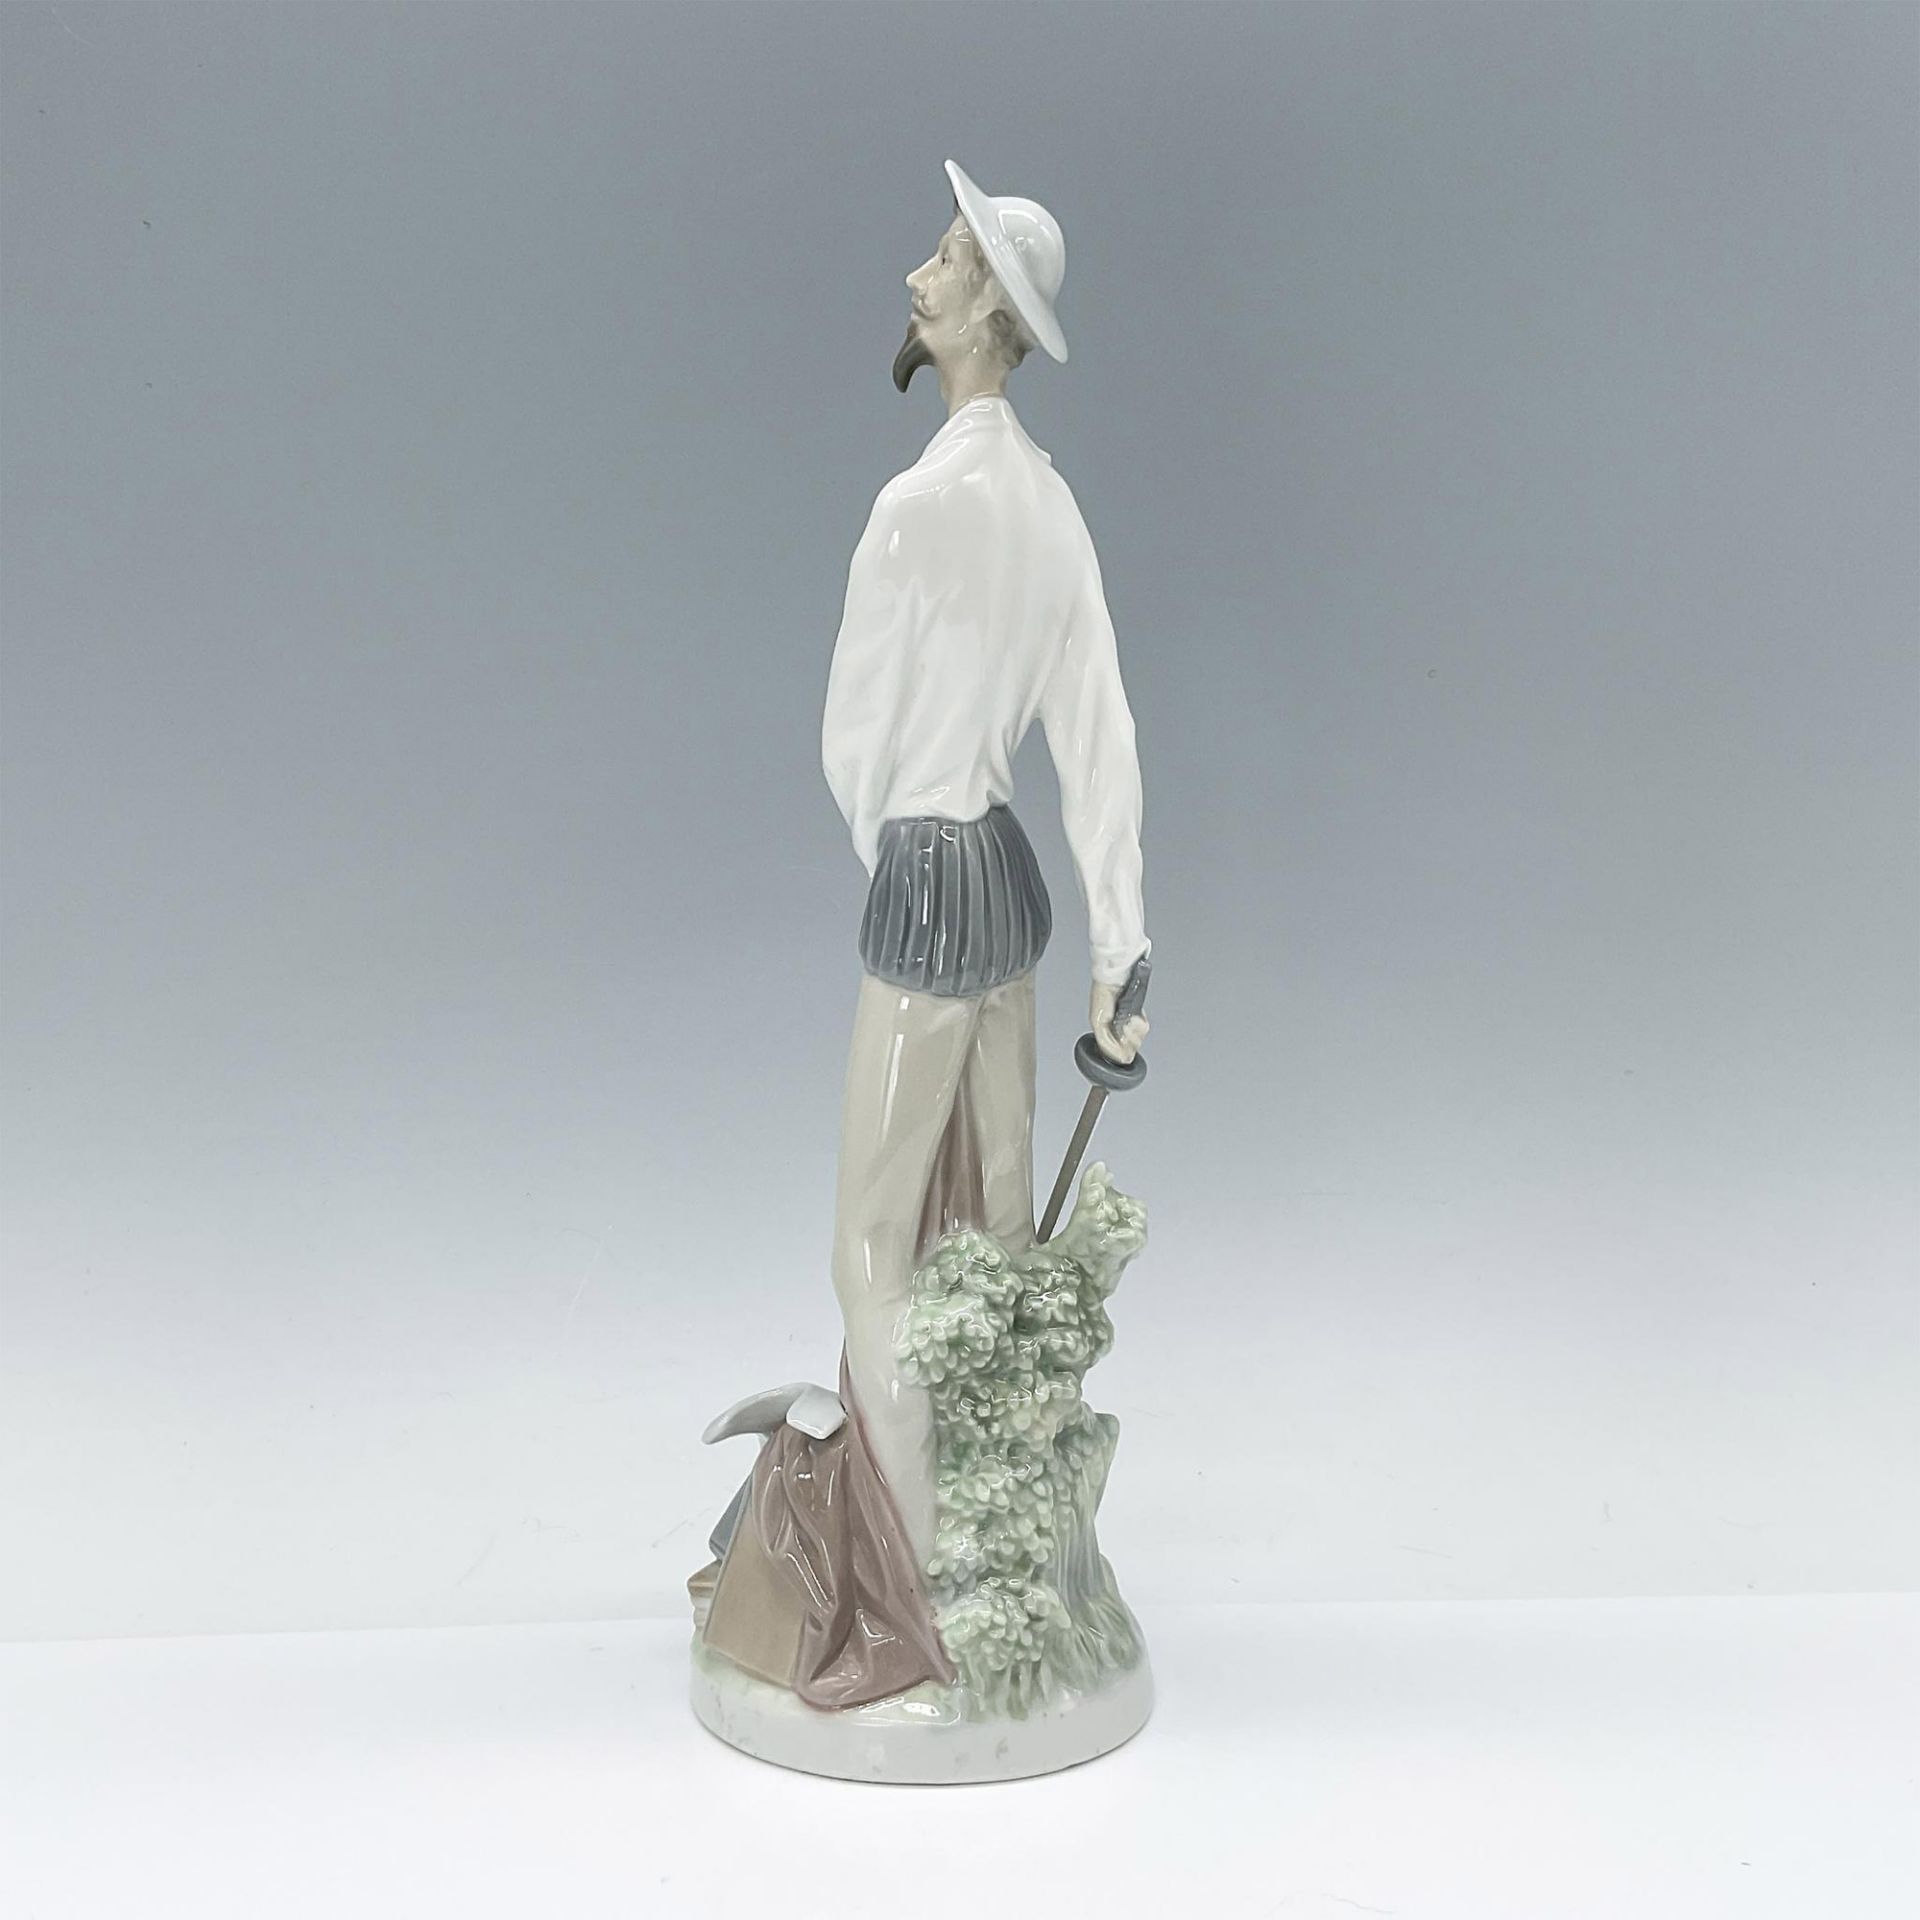 Lladro Porcelain Figurine Don Quixote 1004854 - Image 2 of 3